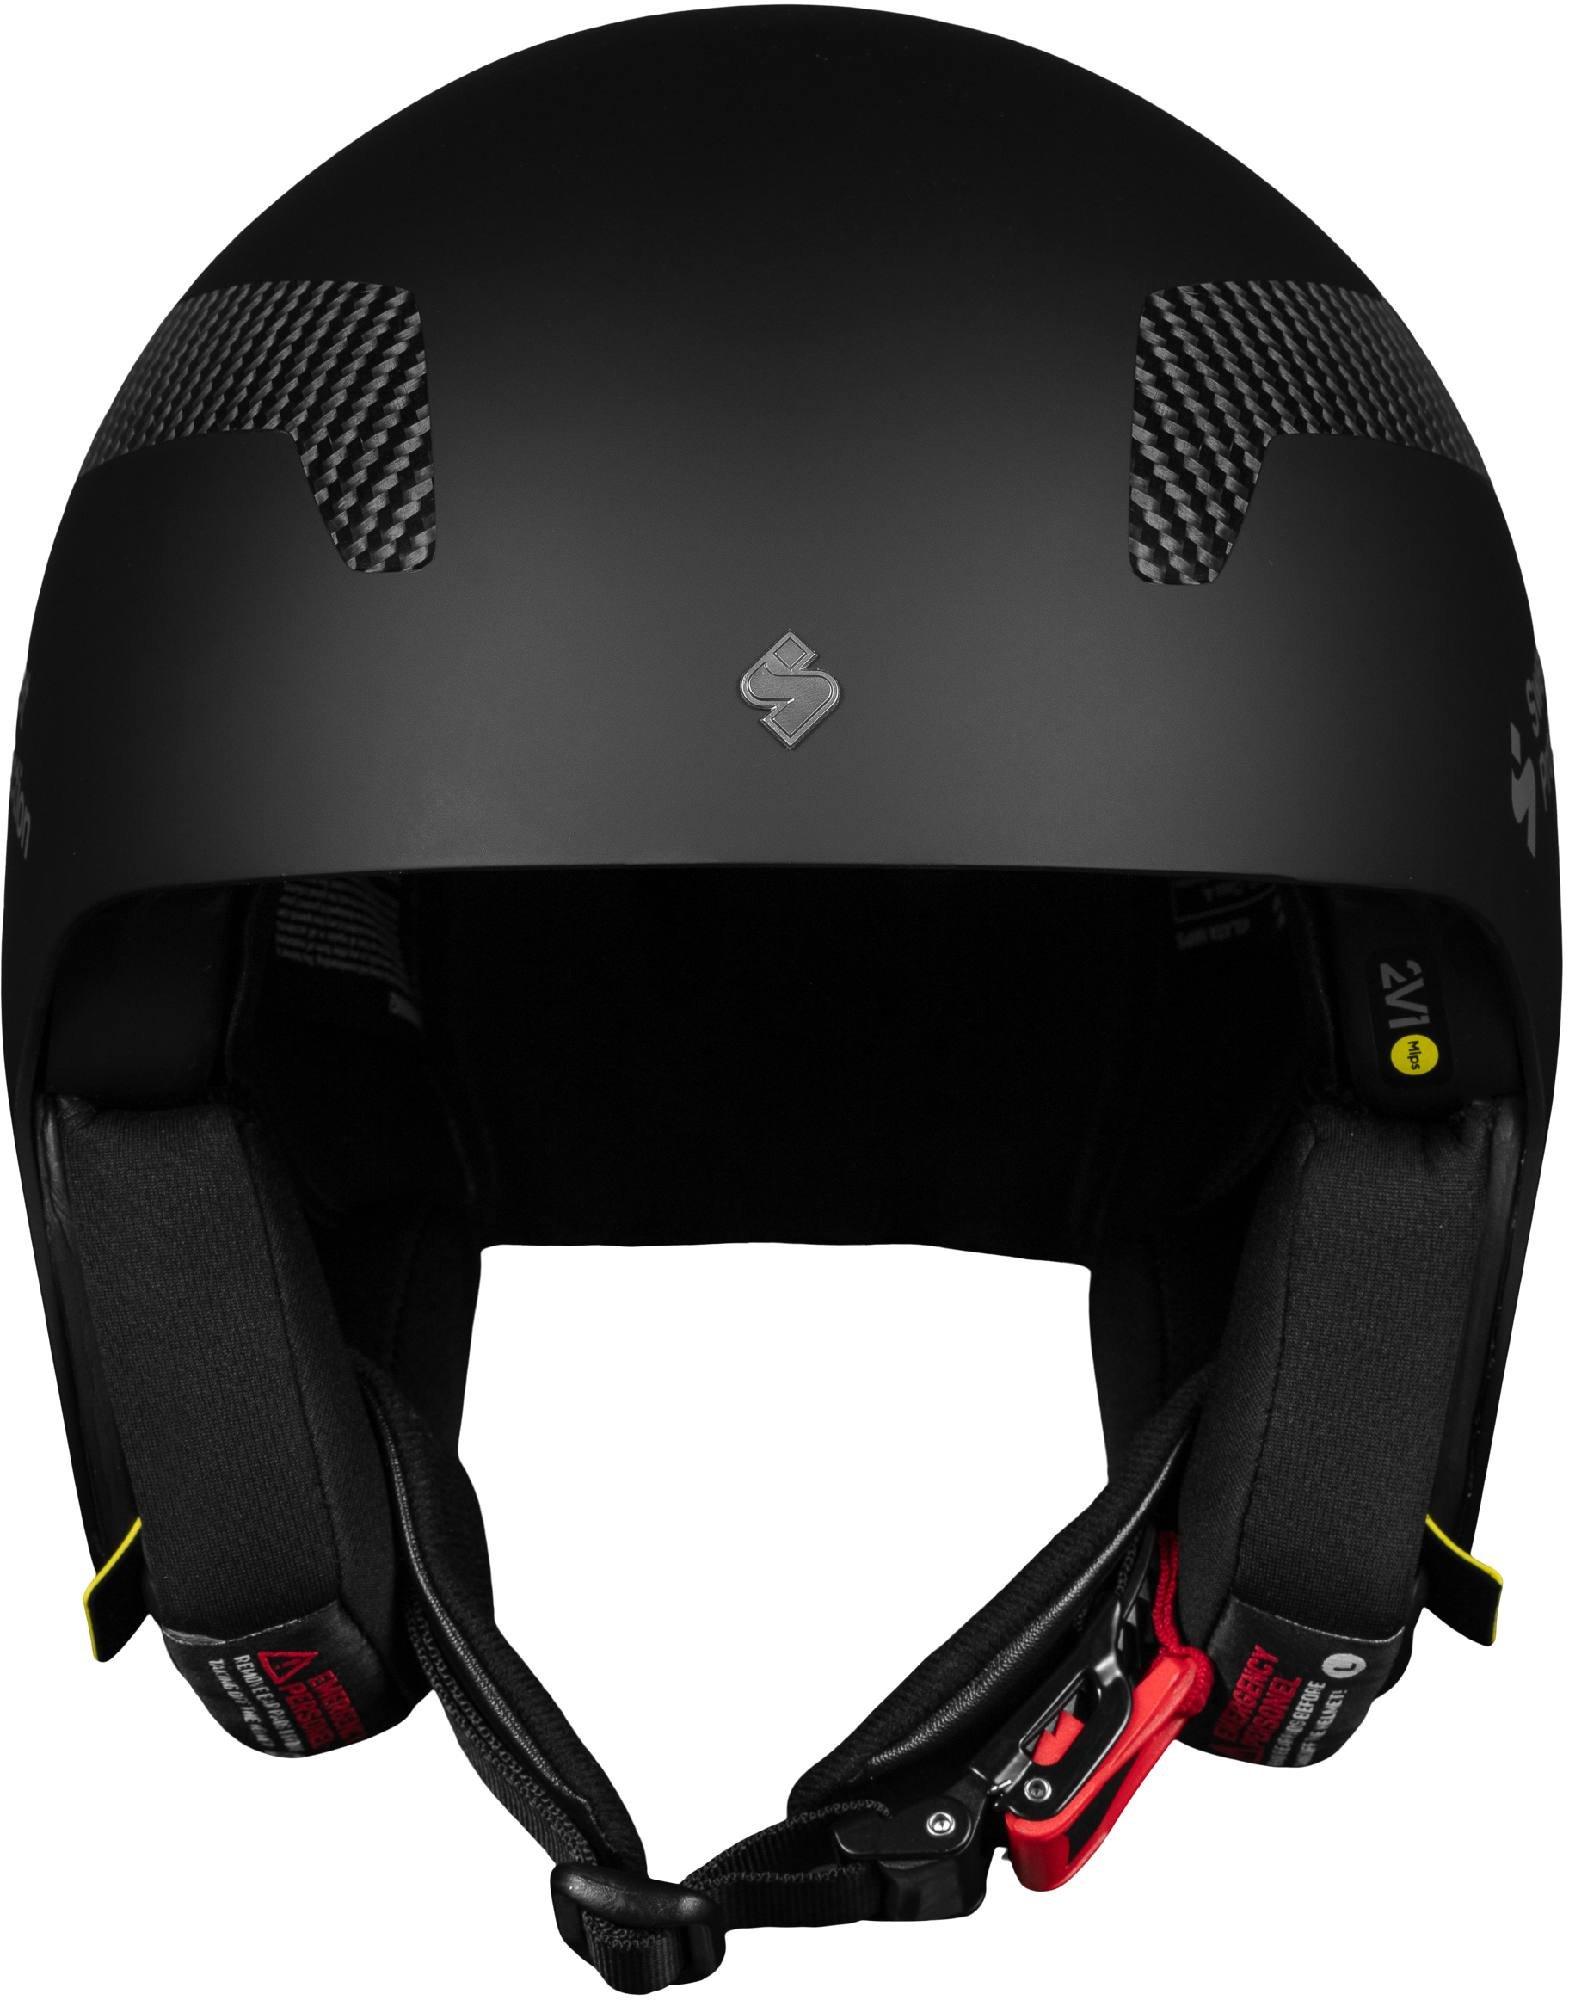 Sweet Volata Carbon 2Vi MIPS Helmet